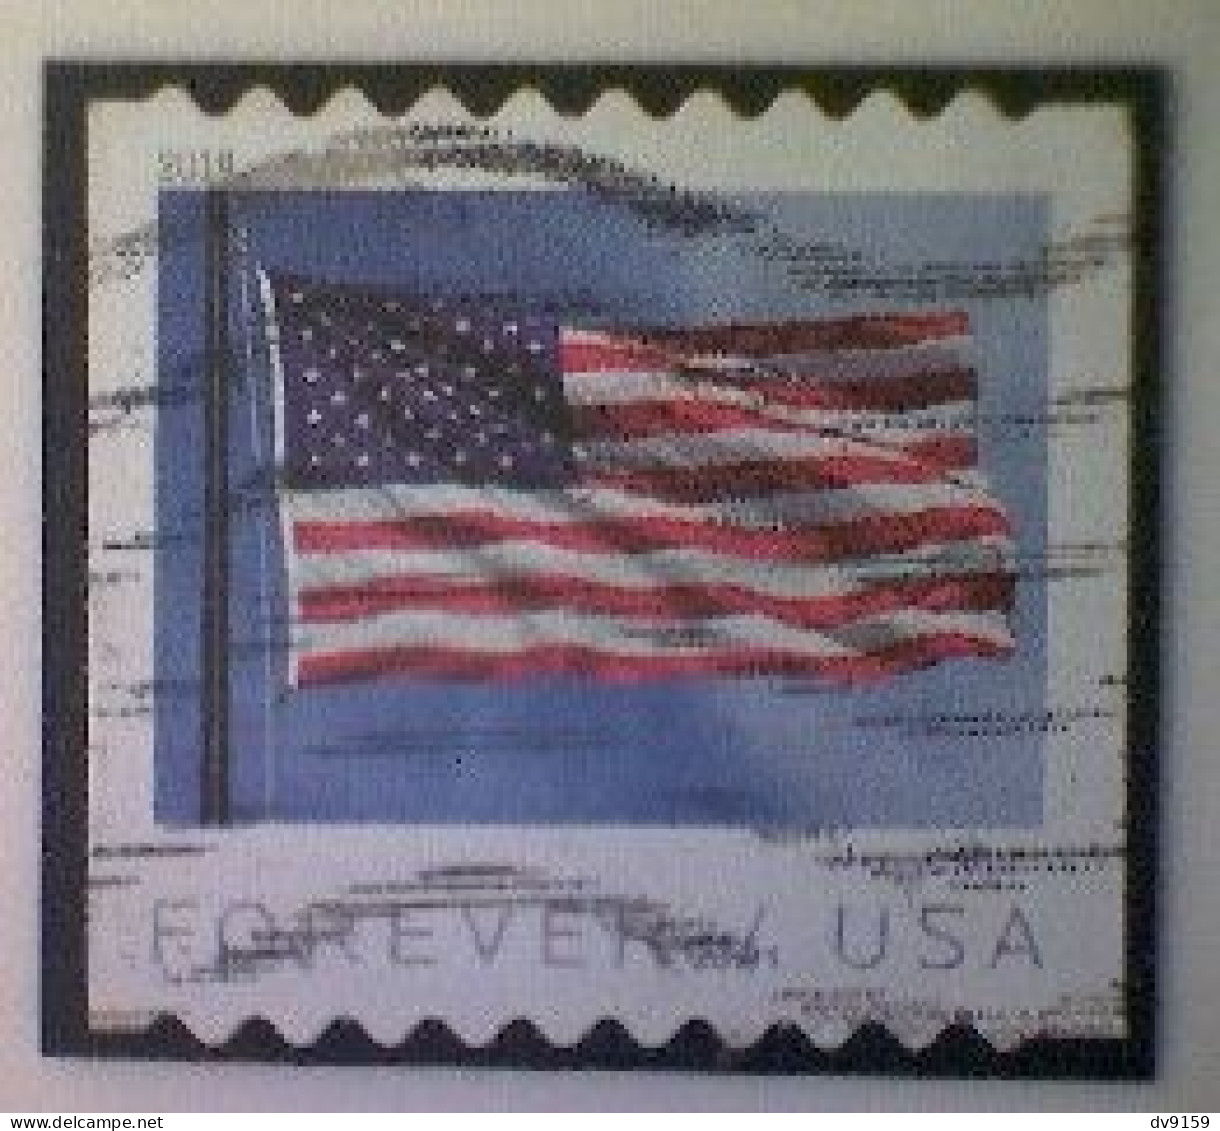 United States, Scott #5342, Used(o) Coil, 2019, Flag Definitive, (55¢) - Usati